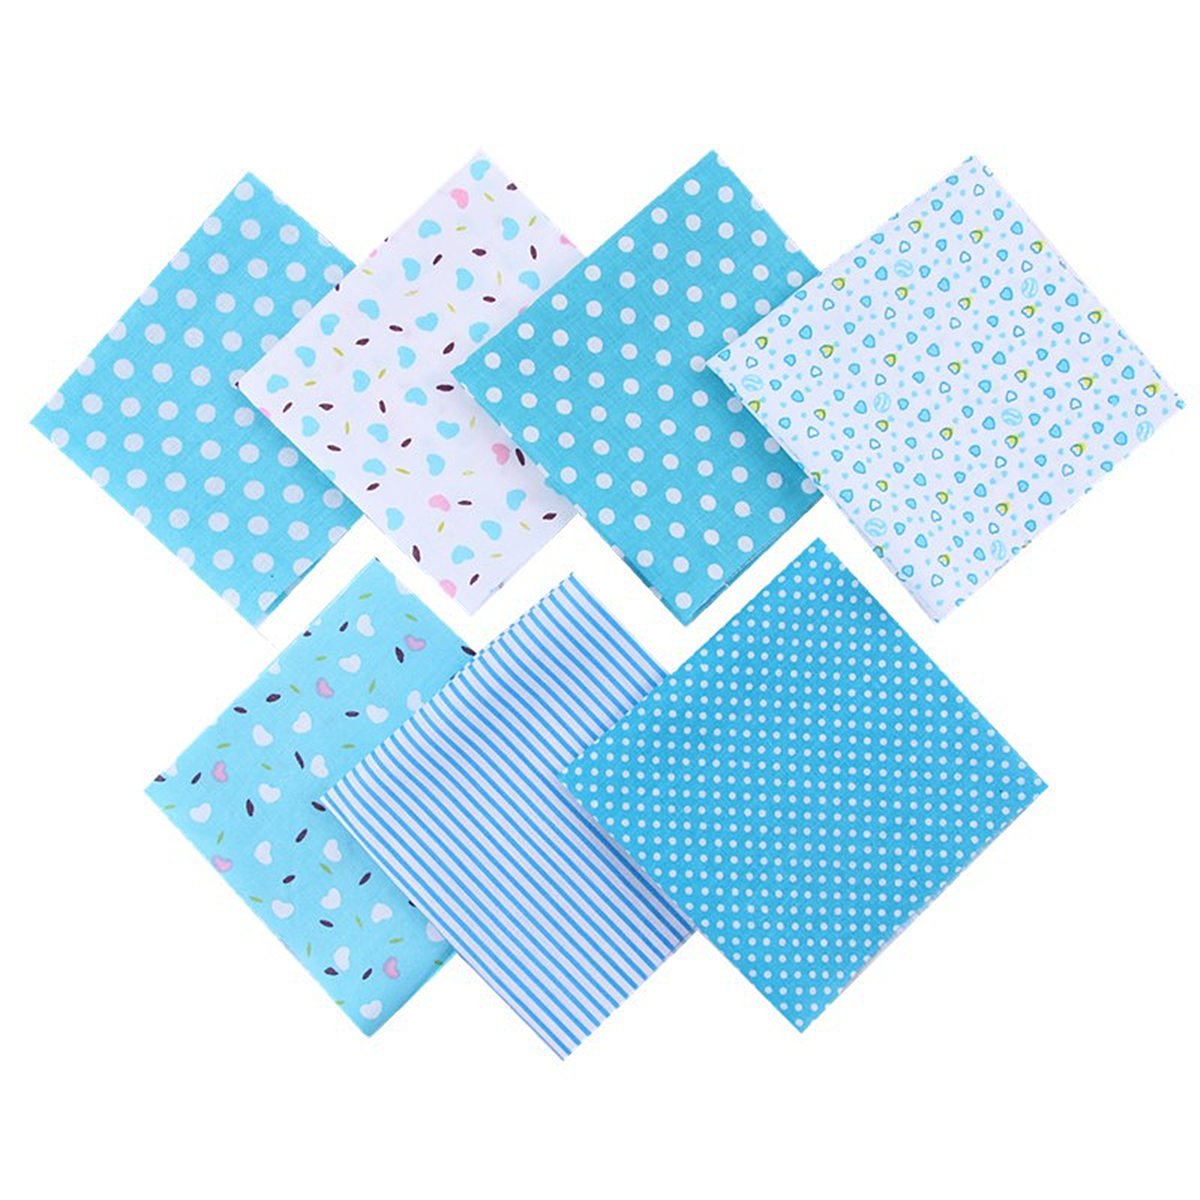 DIY-7PCS-Quilting-Bundle-Patchwork-Cotton-Fabric-Handmade-Sewing-Crafts-Floral-1691620-3